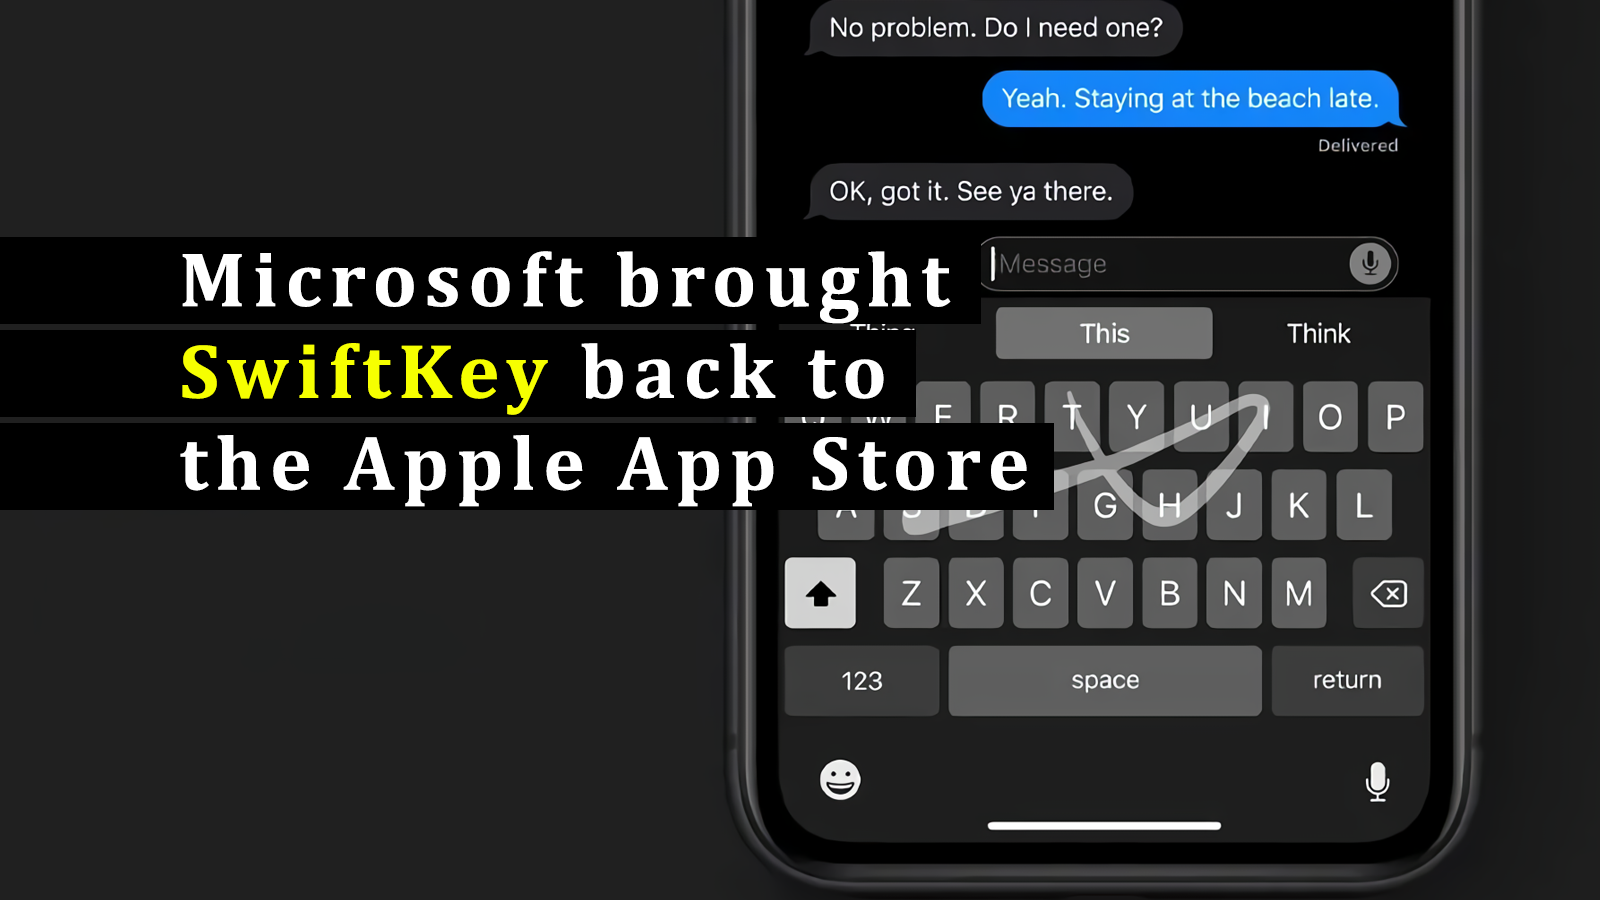 Microsoft brought SwiftKey back to the Apple App Store